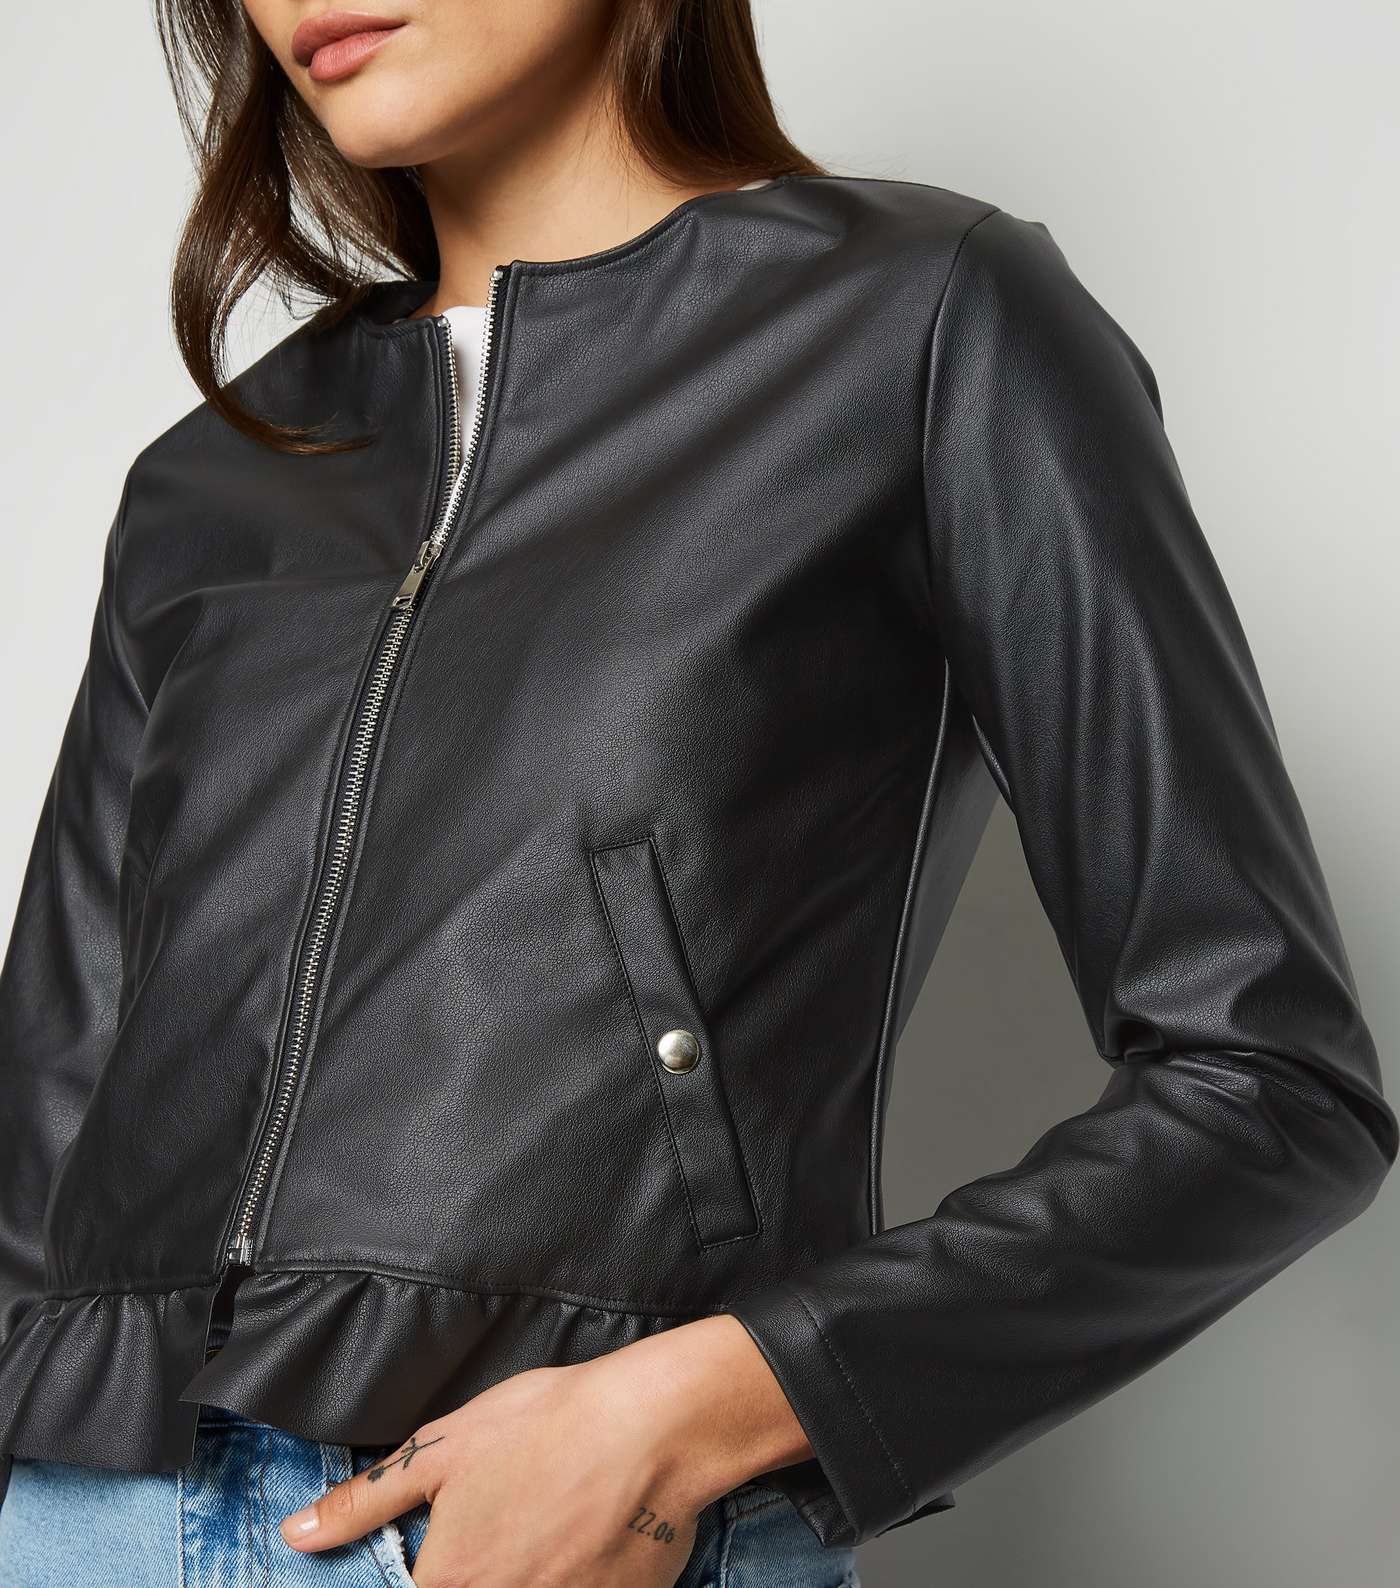 Urban Bliss Black Leather-Look Peplum Jacket Image 5